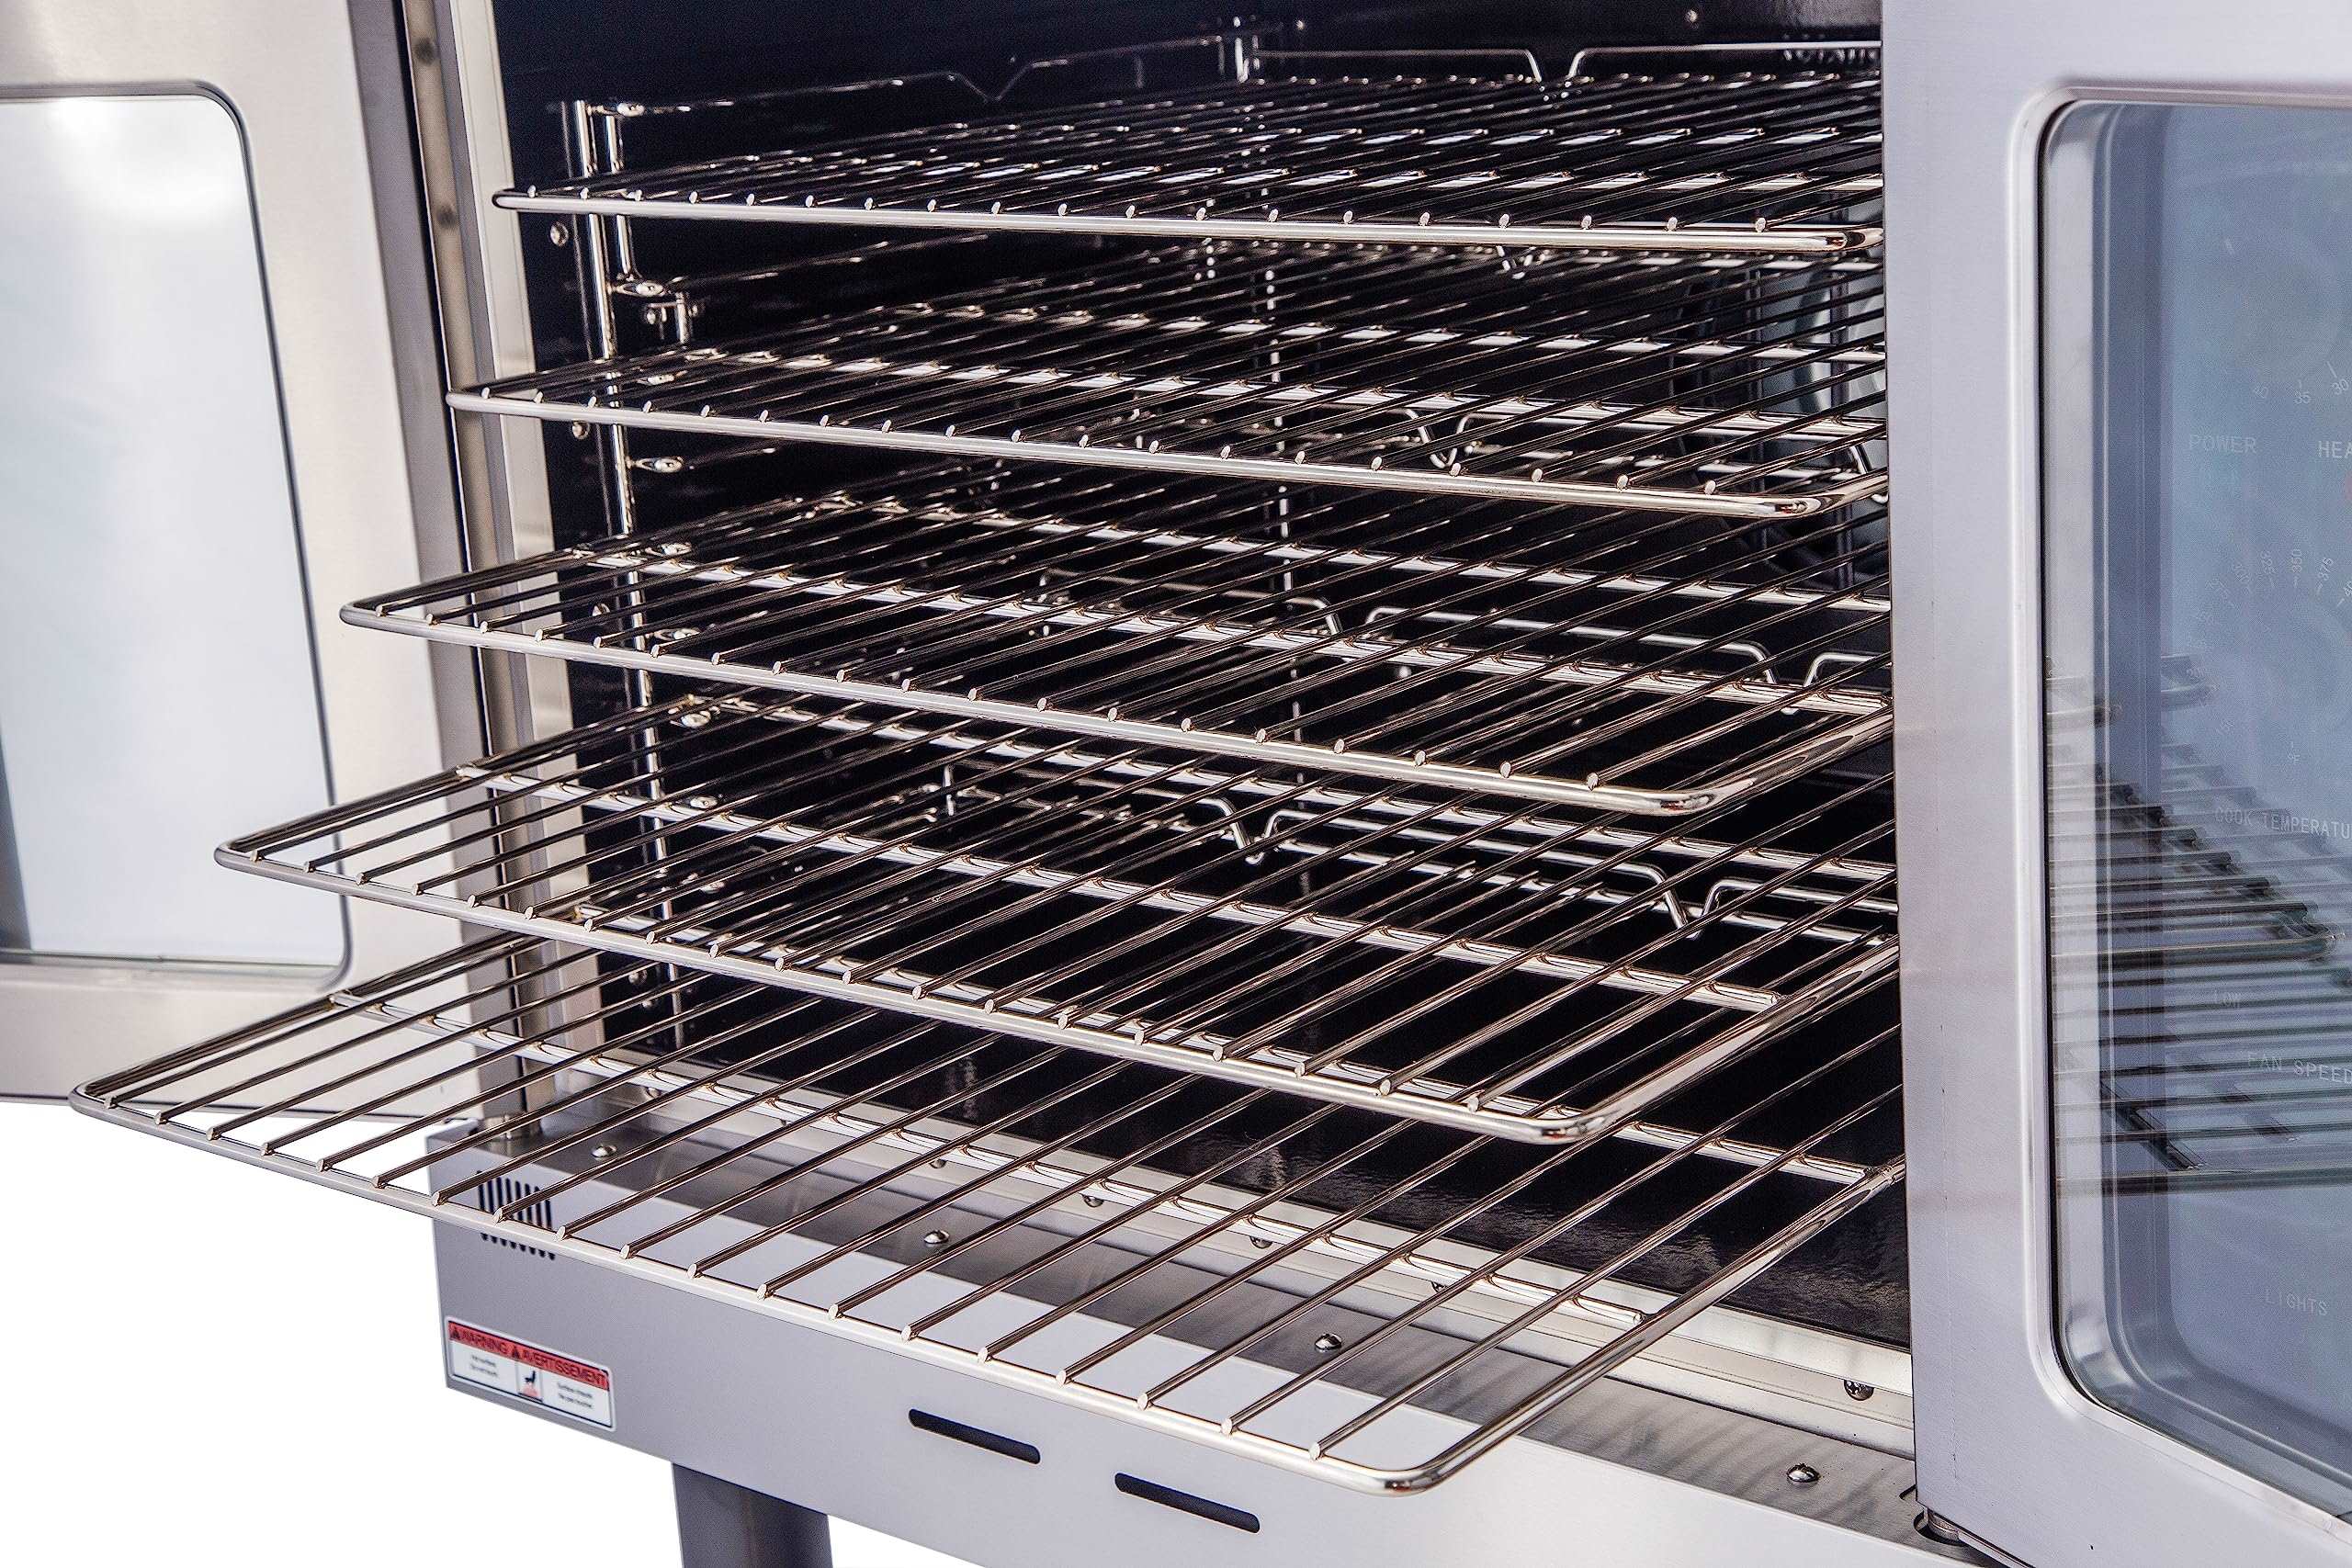 EASYROSE Commercial Convection Oven Single Deck Natural Gas Commercial Ovens for Bakery Kitchen Restaurant, 60,000 BTU